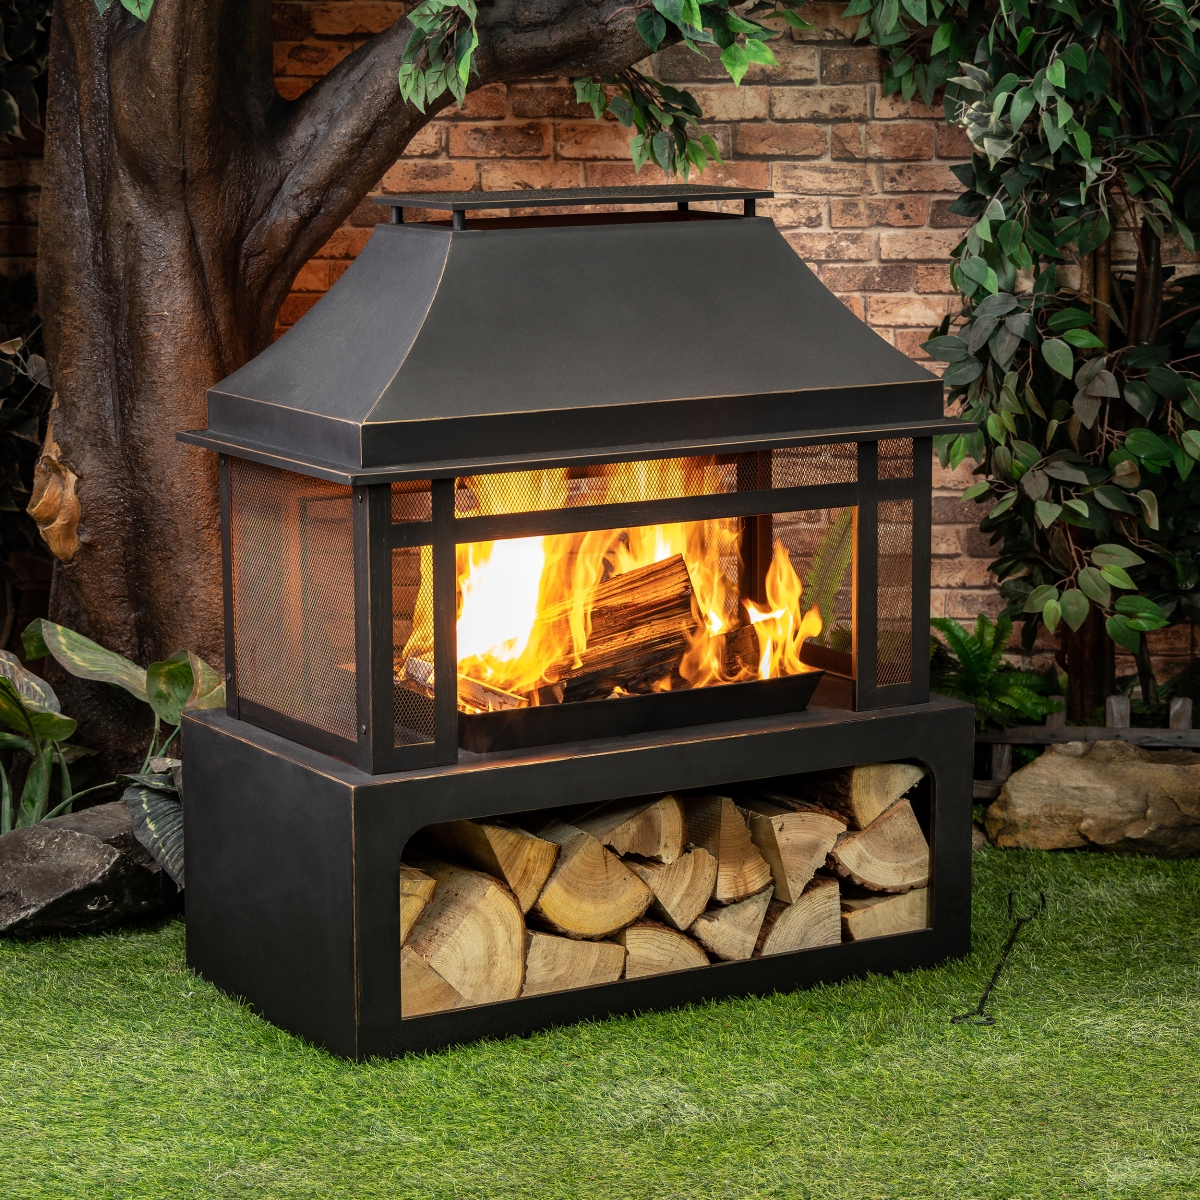 Picture of Deko Living COB10501 40 in. Rectangular Outdoor Metal Woodburning Fireplace with Log Storage